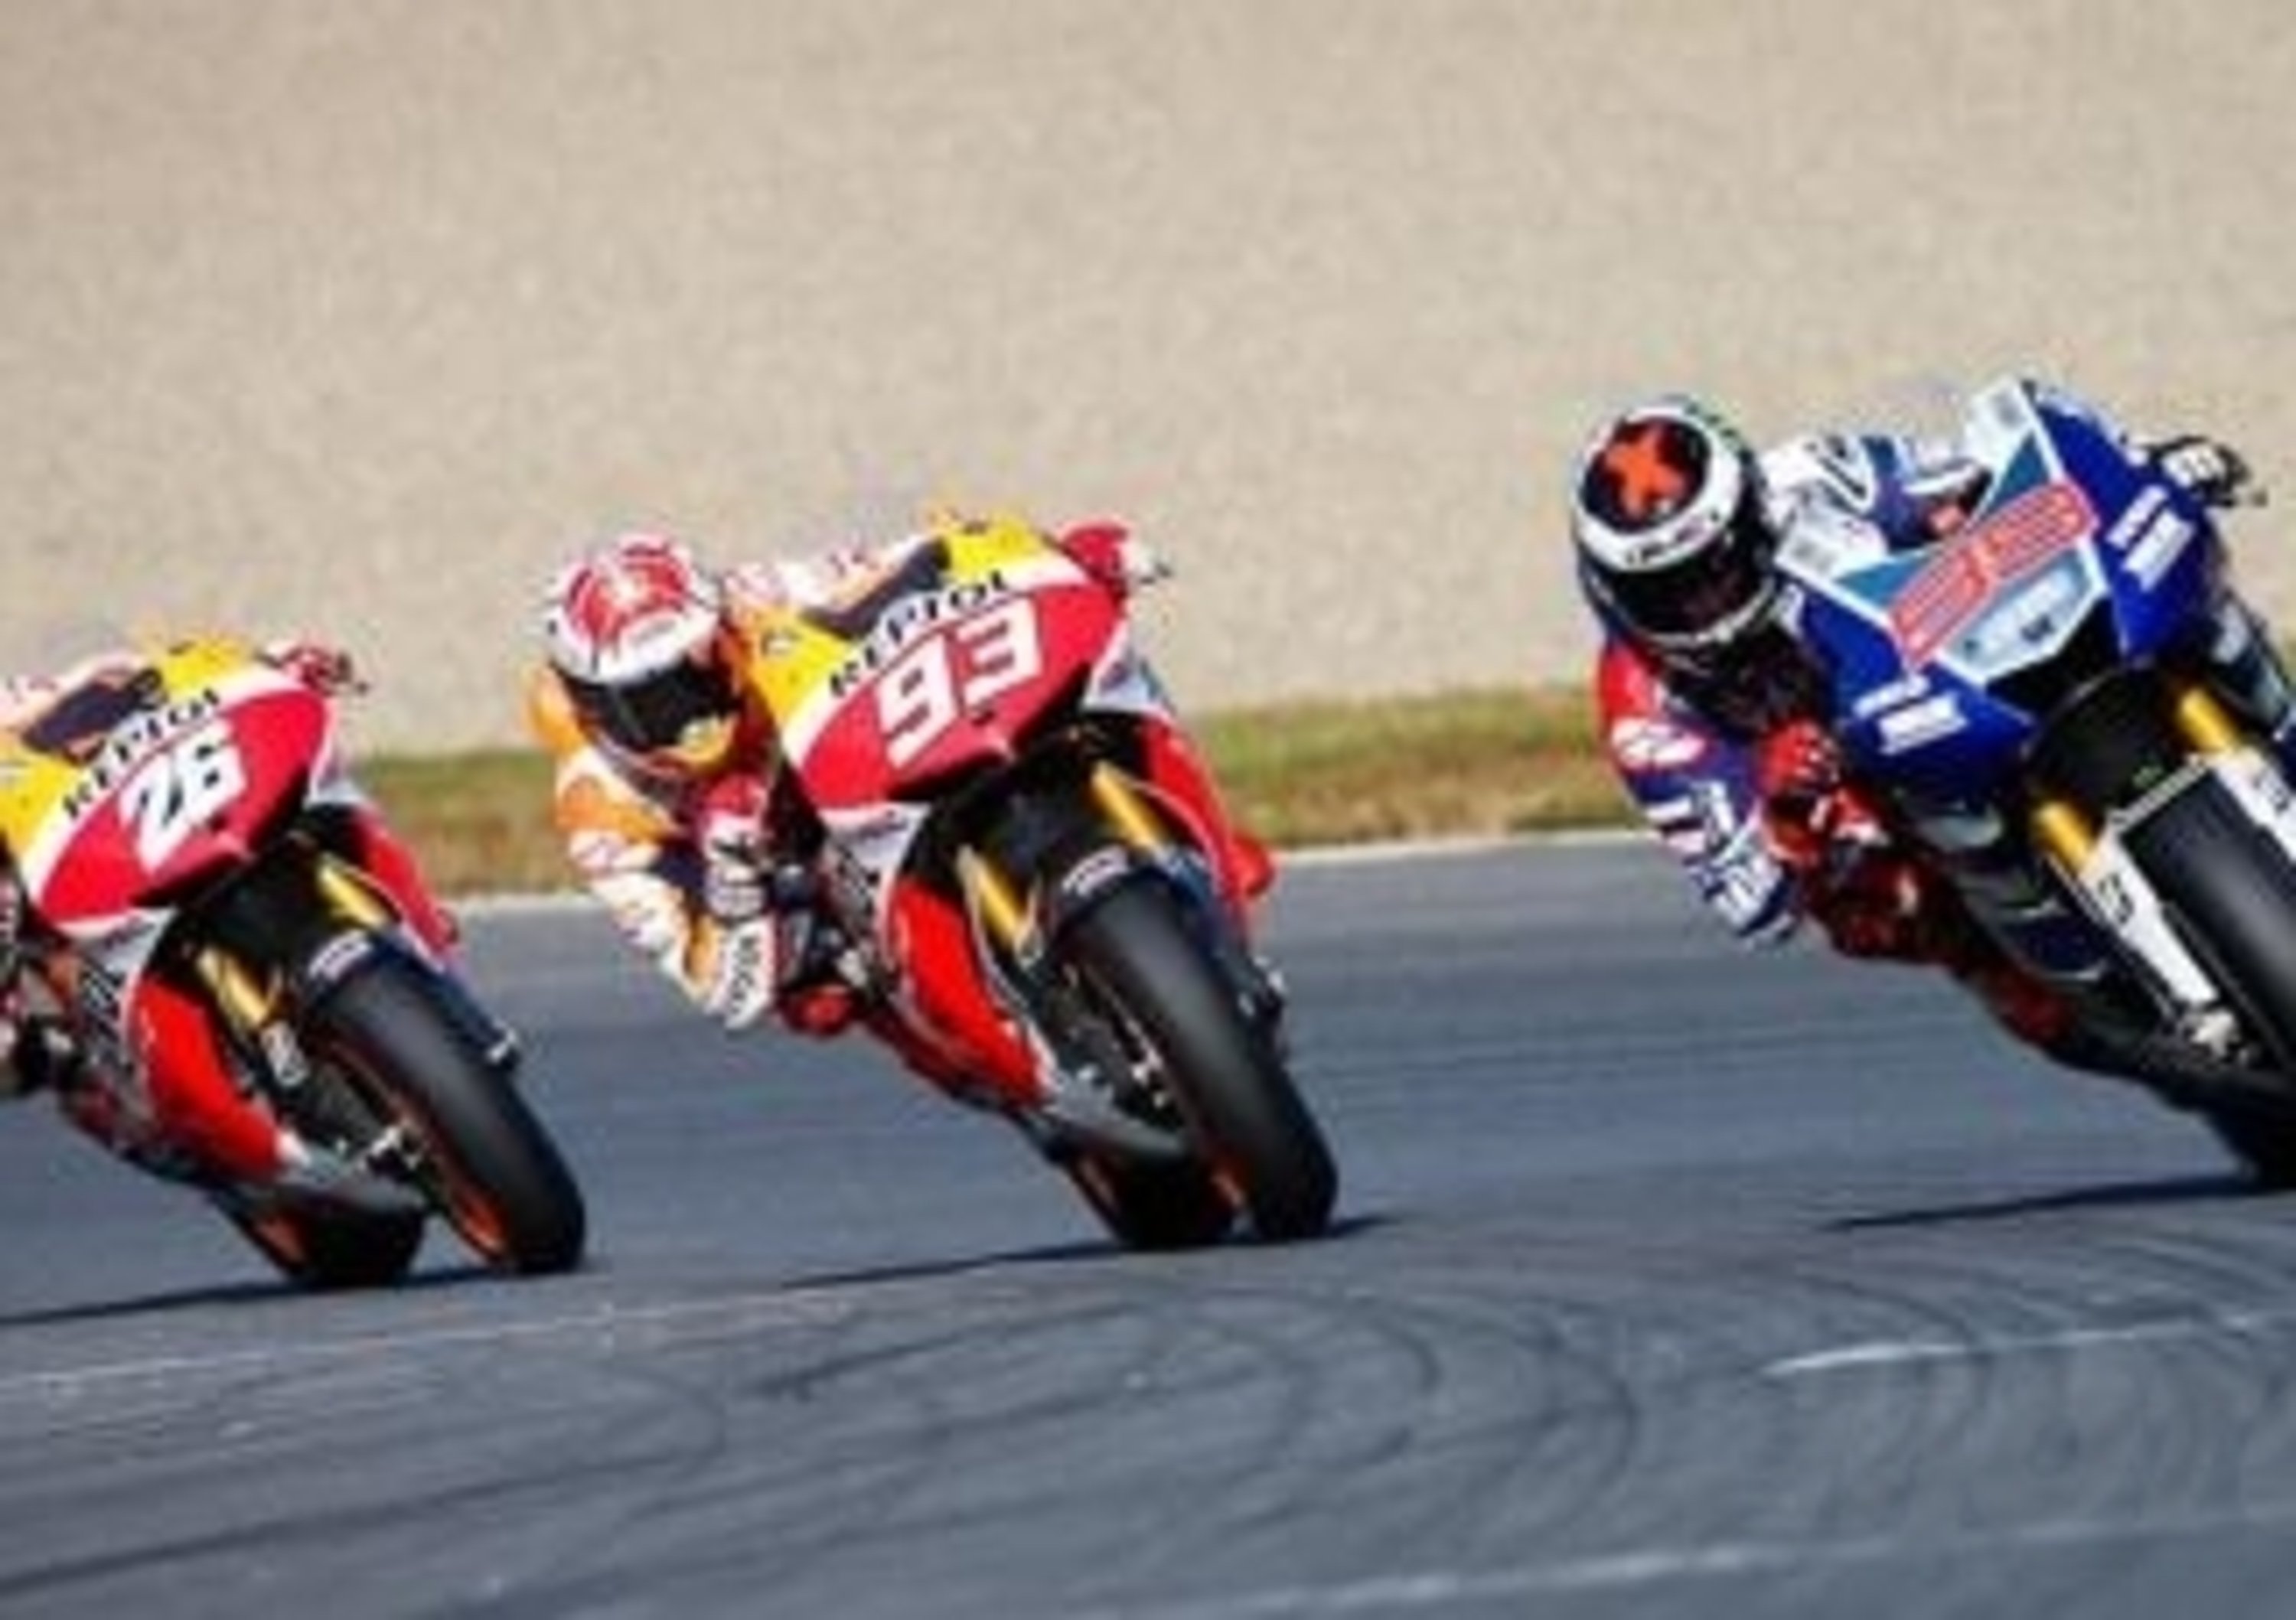 MotoGP 2013 - Le pagelle del GP del Giappone